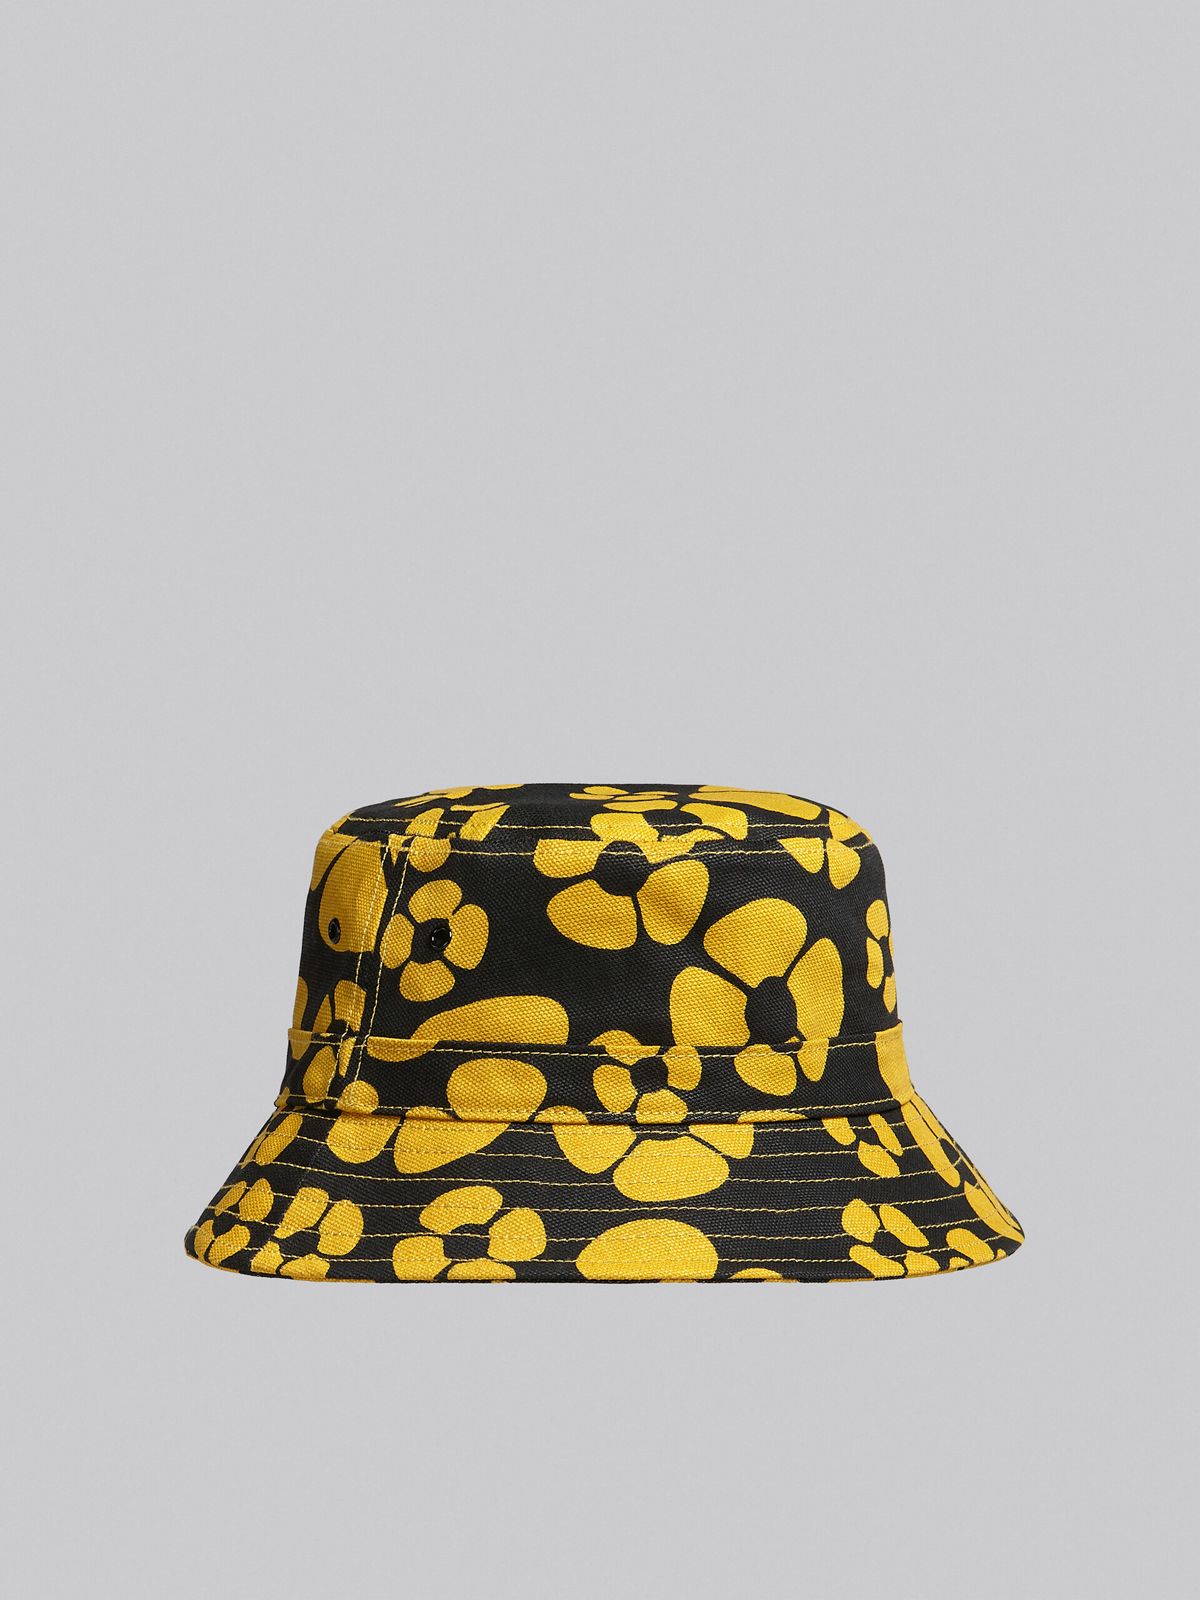 MARNI - 【残りわずか】 MARNI X CARHARTT WIP - YELLOW BUCKET HAT 